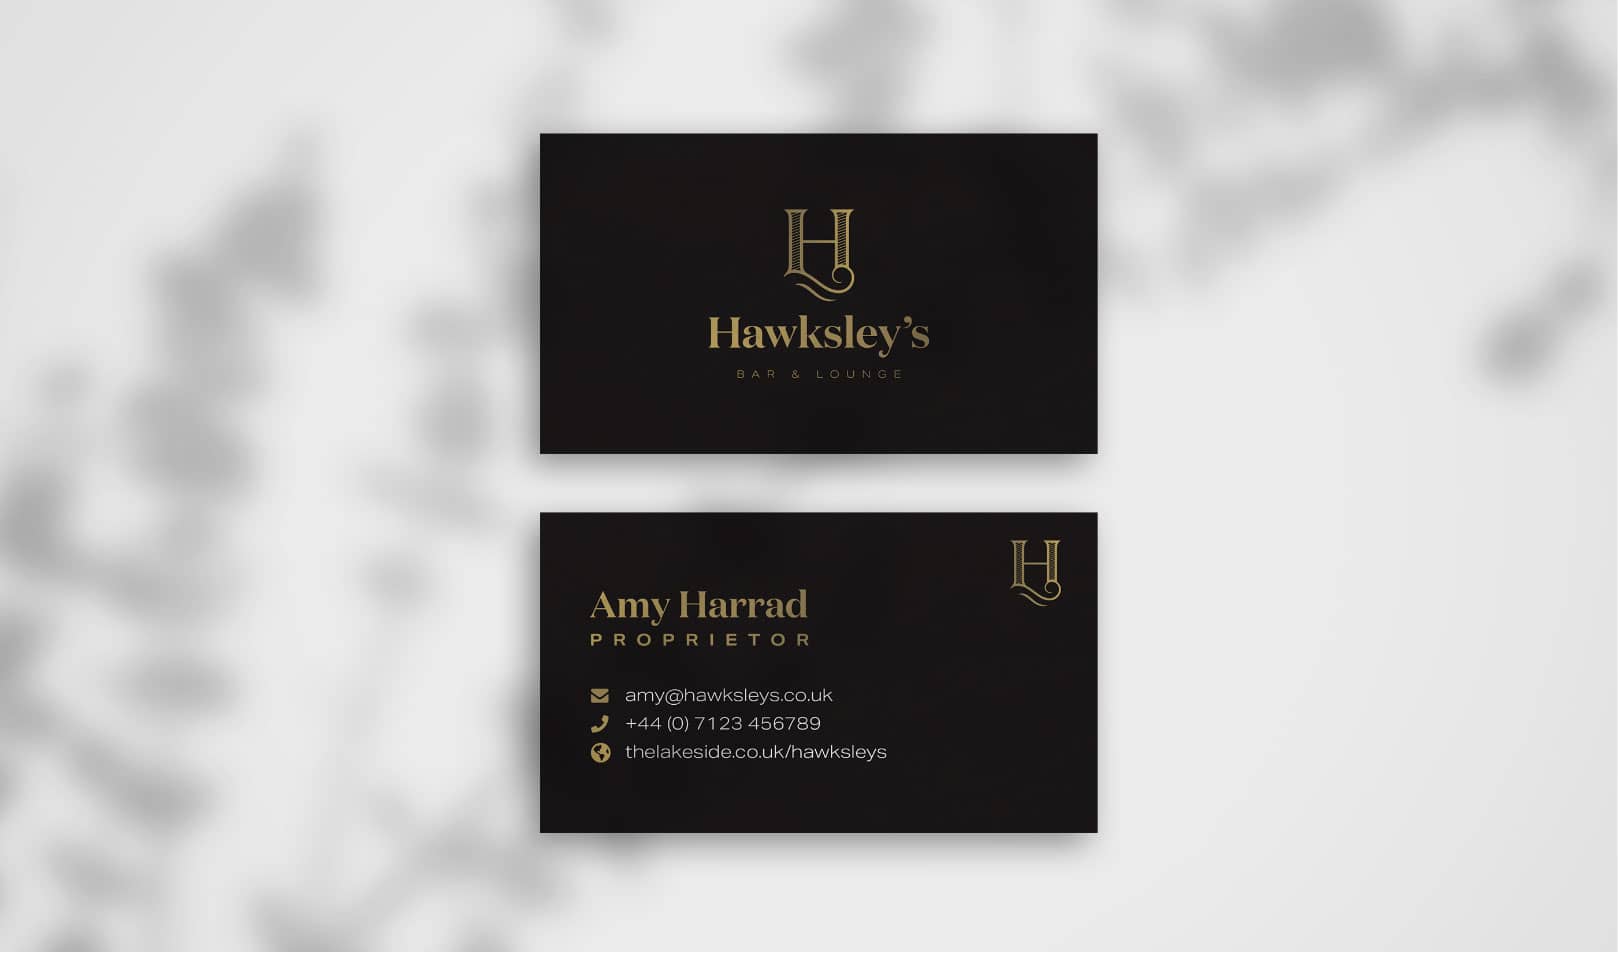 Hawksley's design case study business card mockups